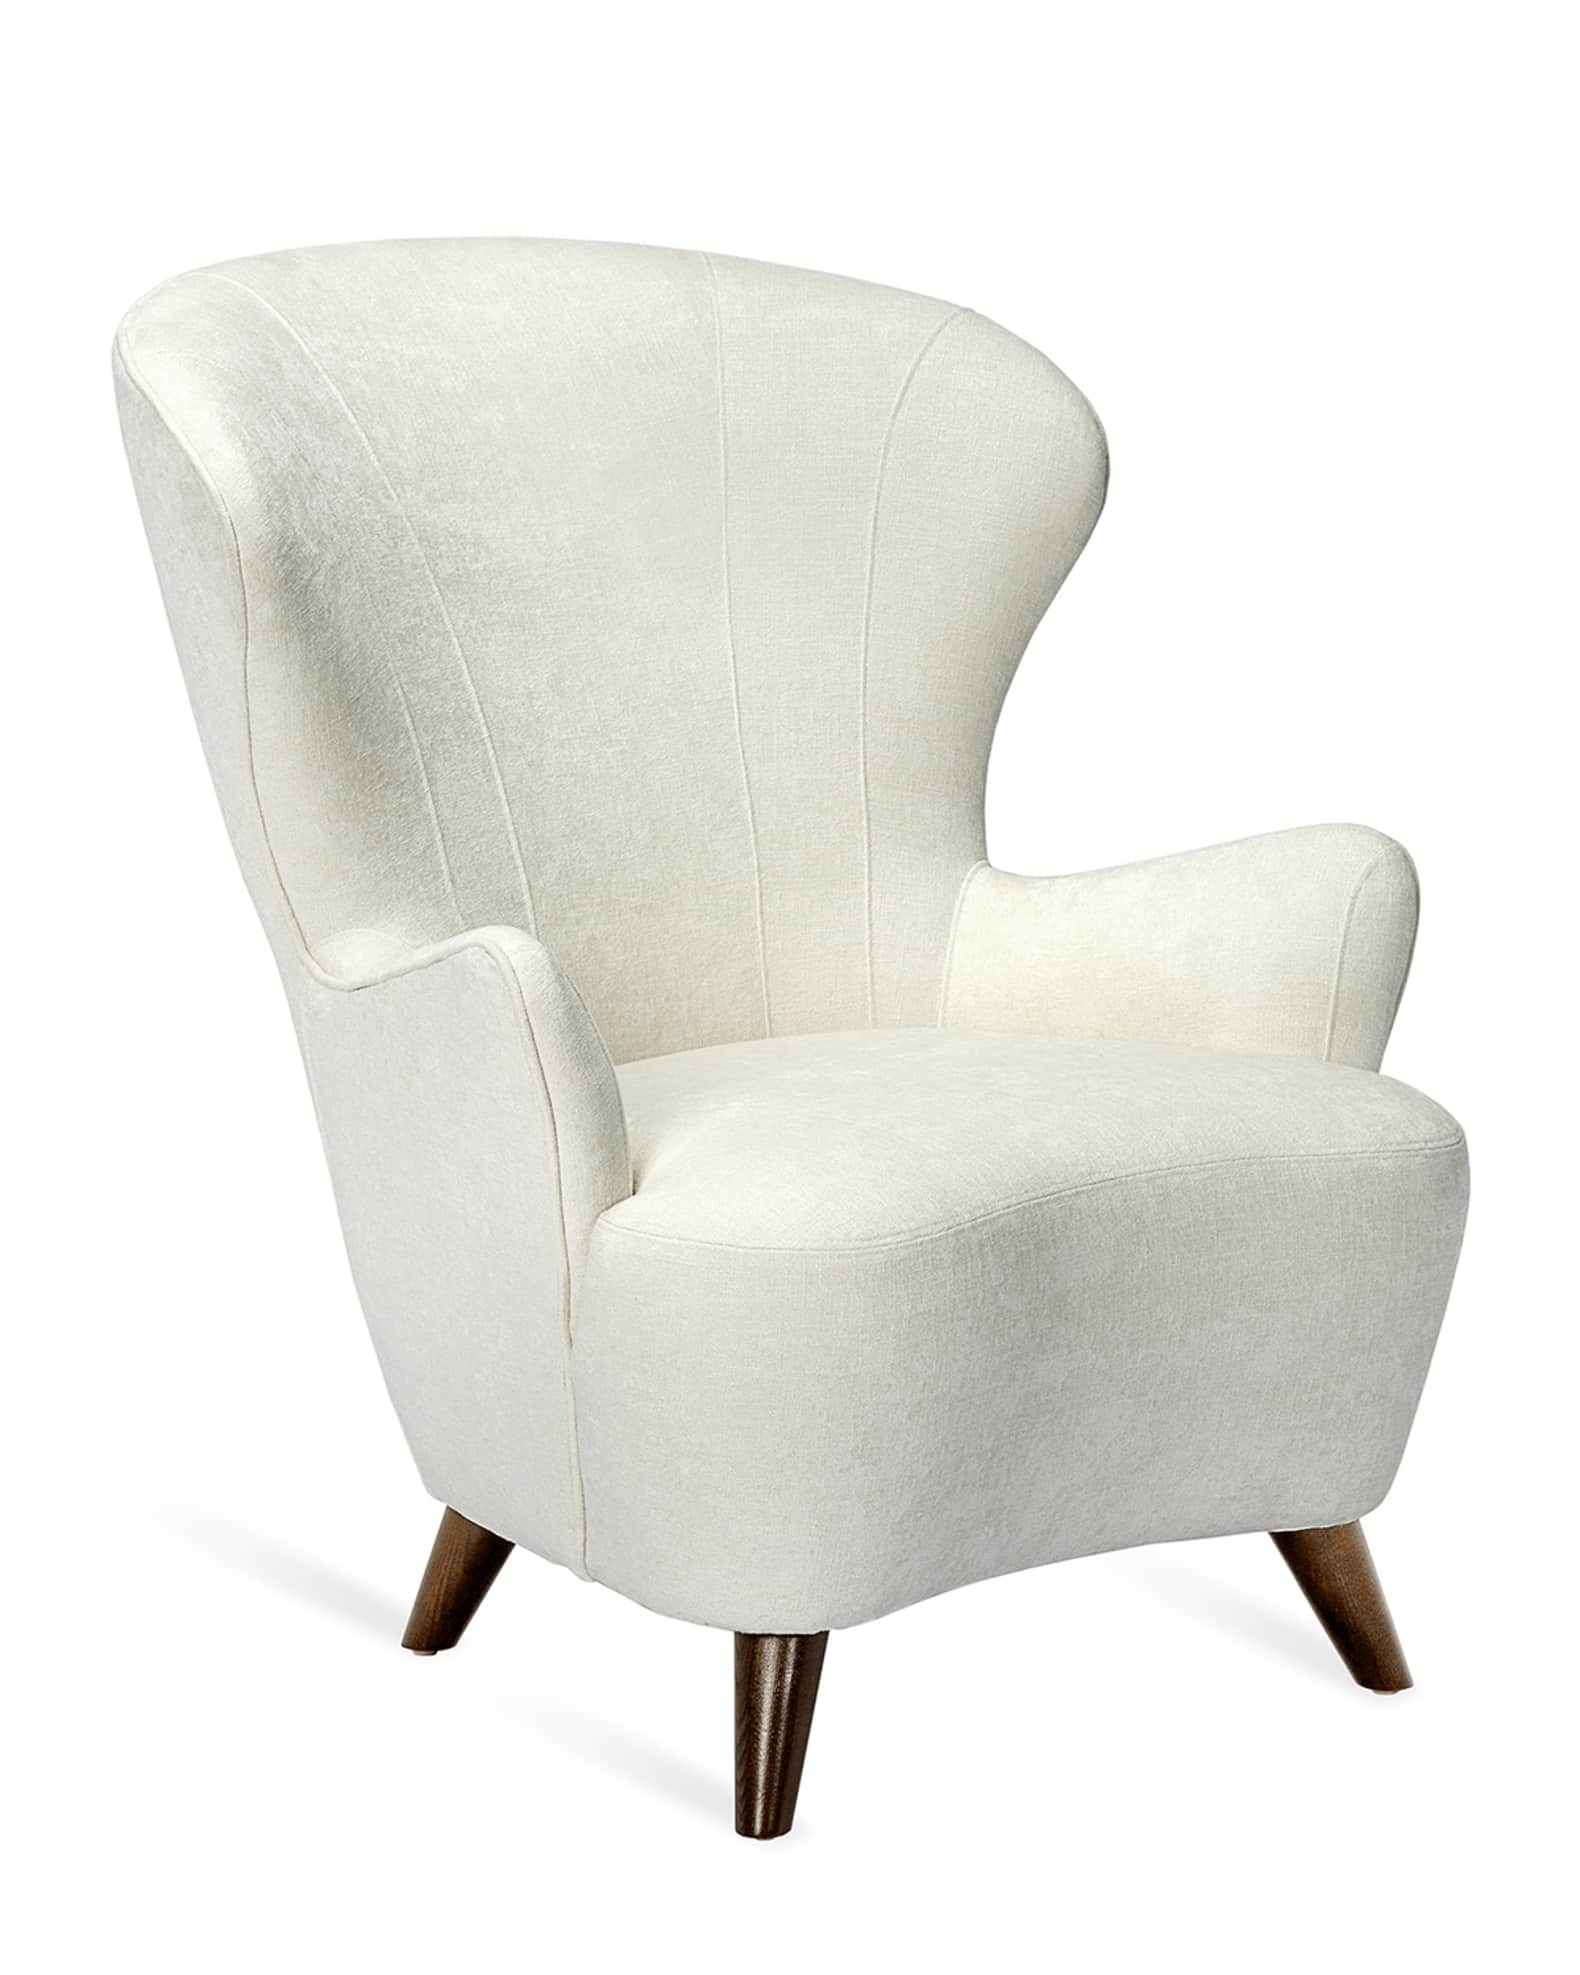 Interlude Home Ollie Chair | Neiman Marcus